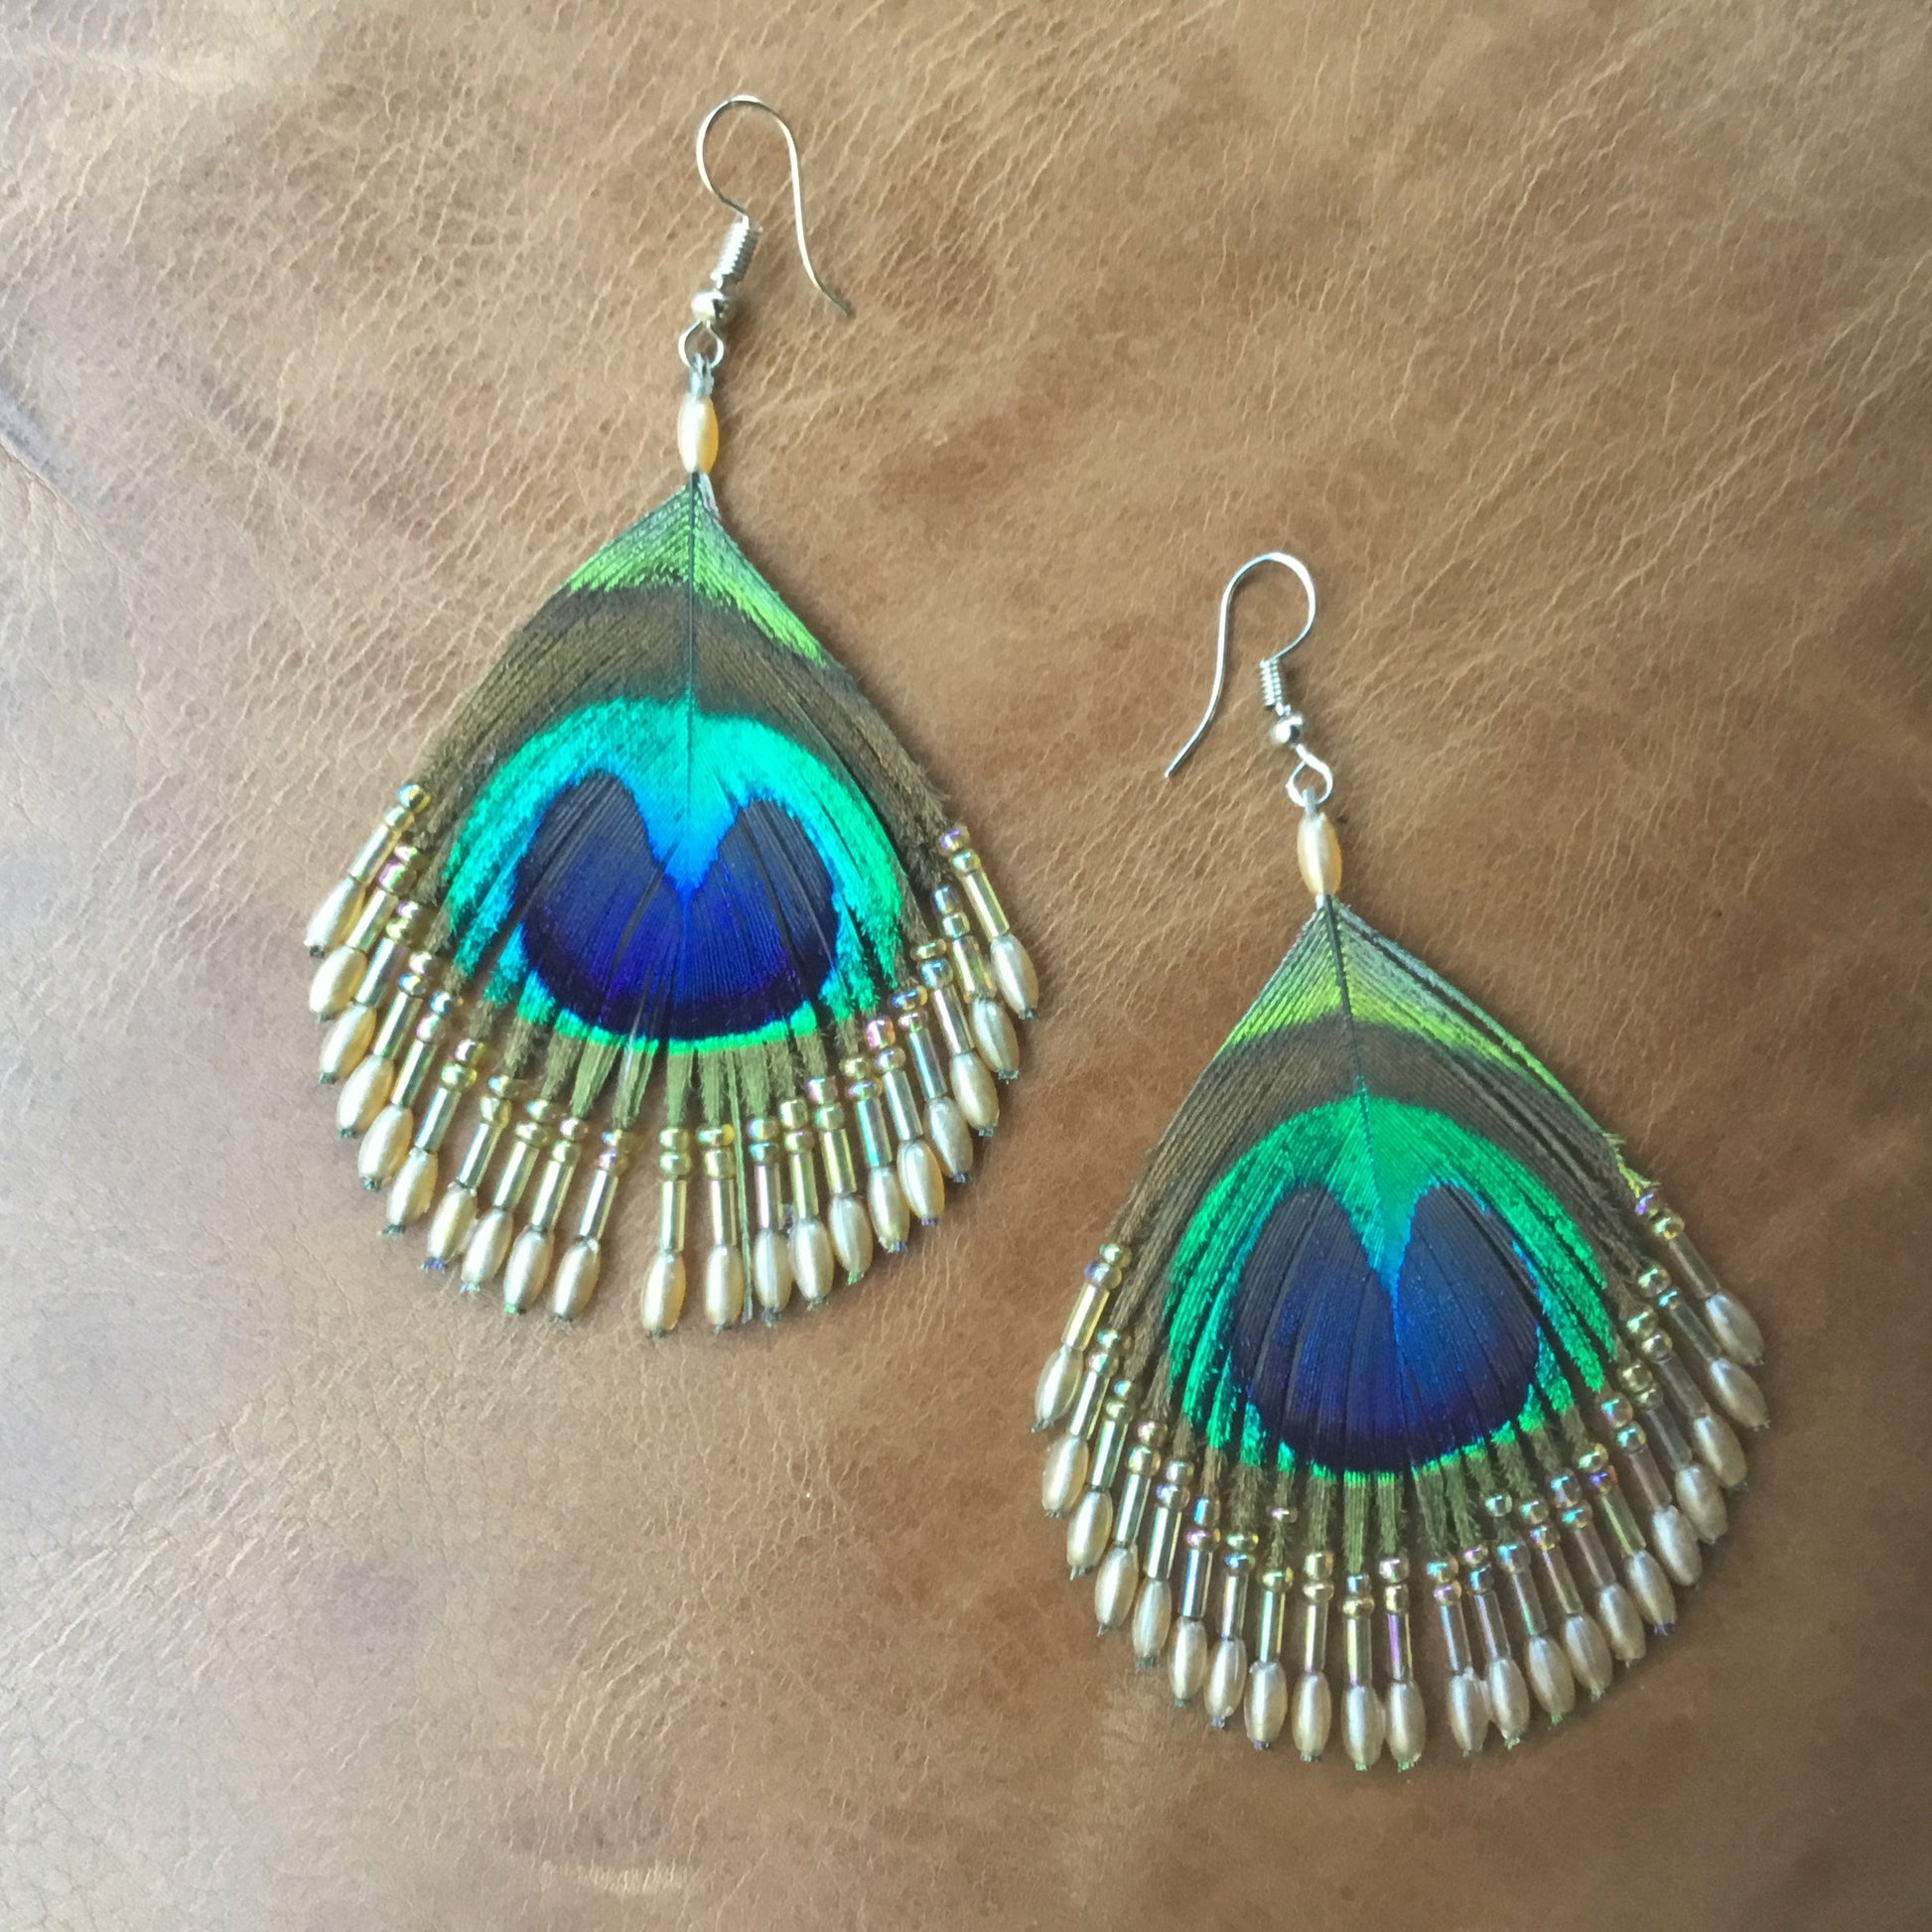 Peacock earrings, french hook.